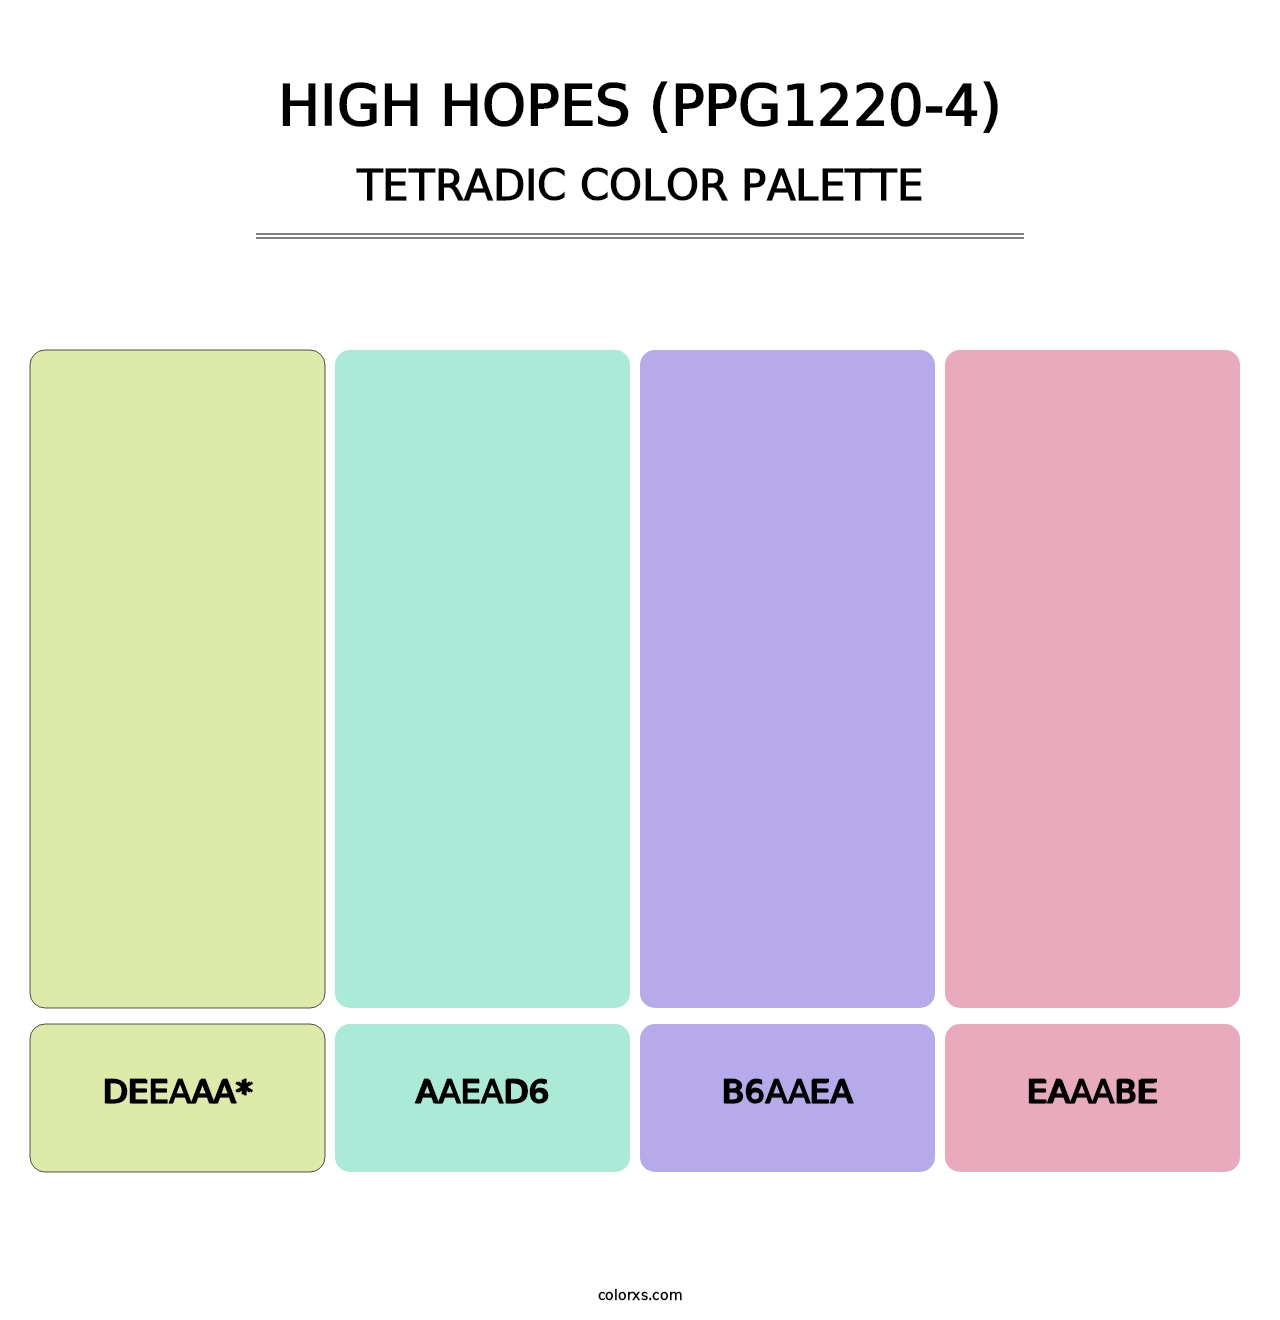 High Hopes (PPG1220-4) - Tetradic Color Palette